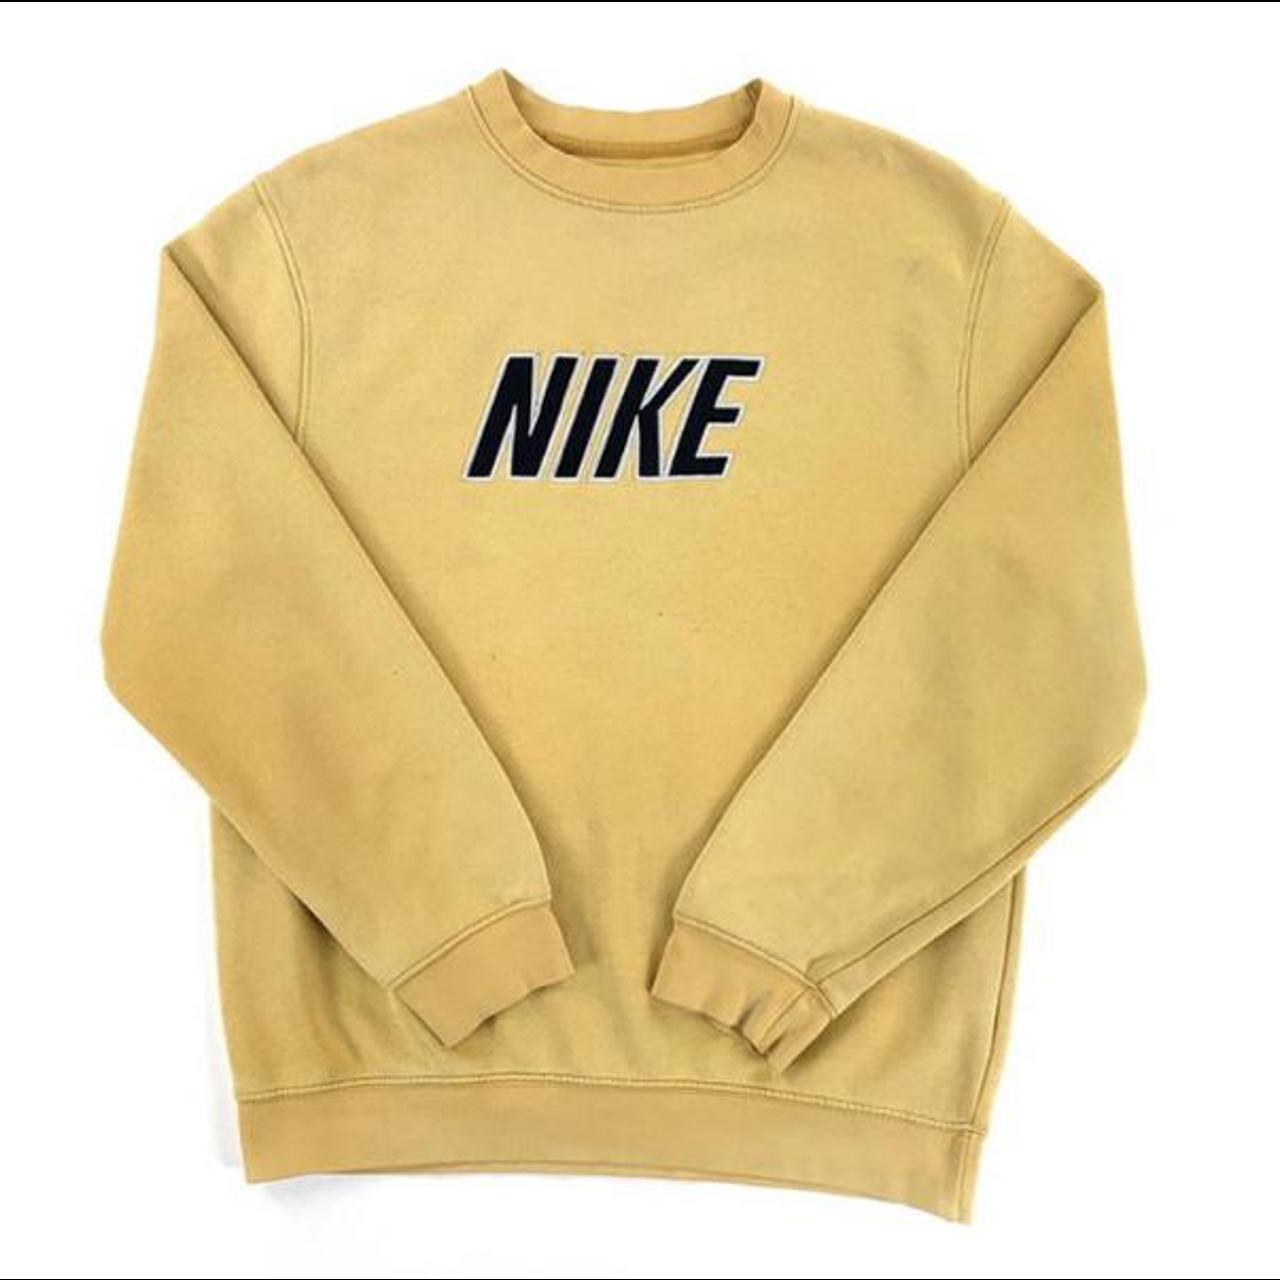 Nike retro vintage yellow jumper/ sweatshirt - spell... - Depop